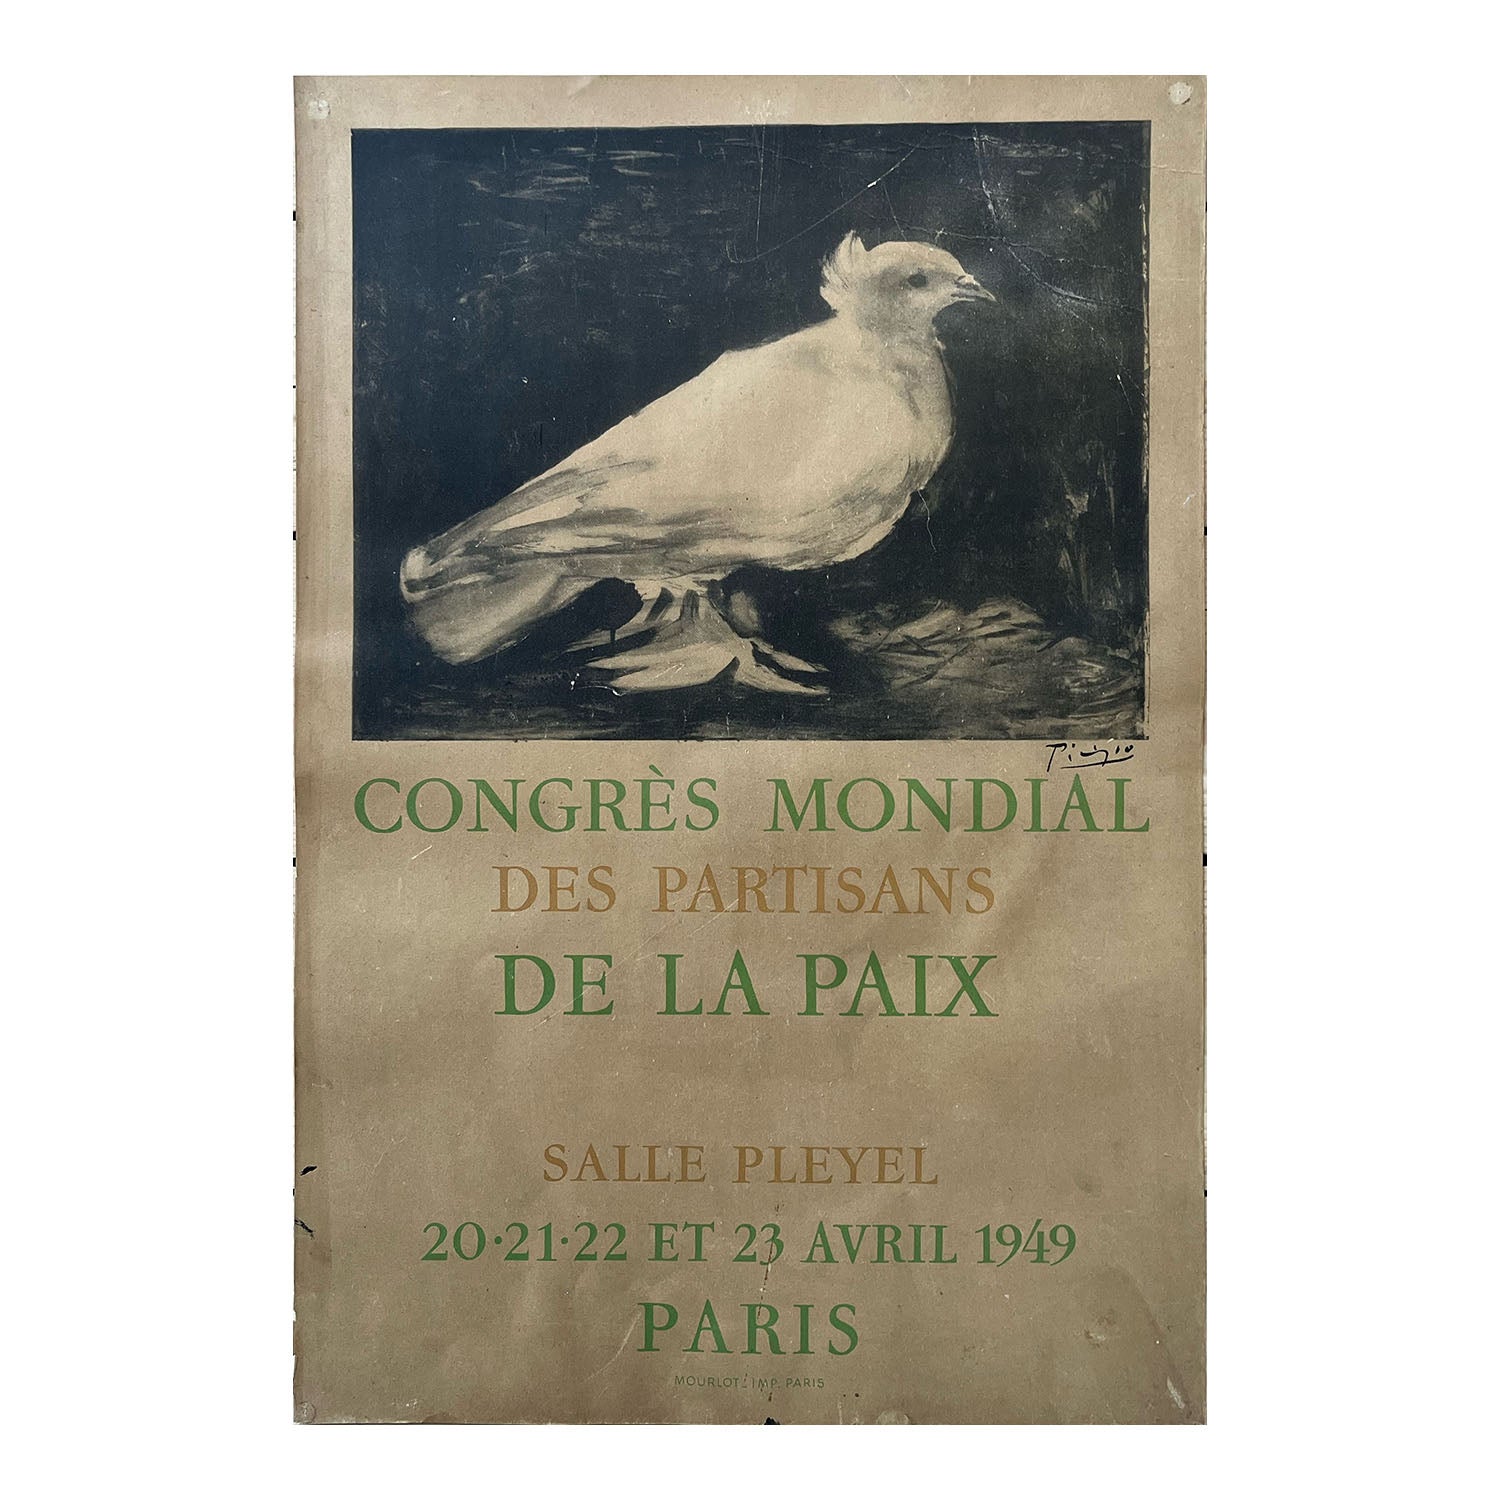 Original, rare, poster for the First International Peace Congress (Congrès mondial des Partisans de la paix), held in Paris, April 1949, featuring the Dove symbol designed specifically for the event by Pablo Picasso.